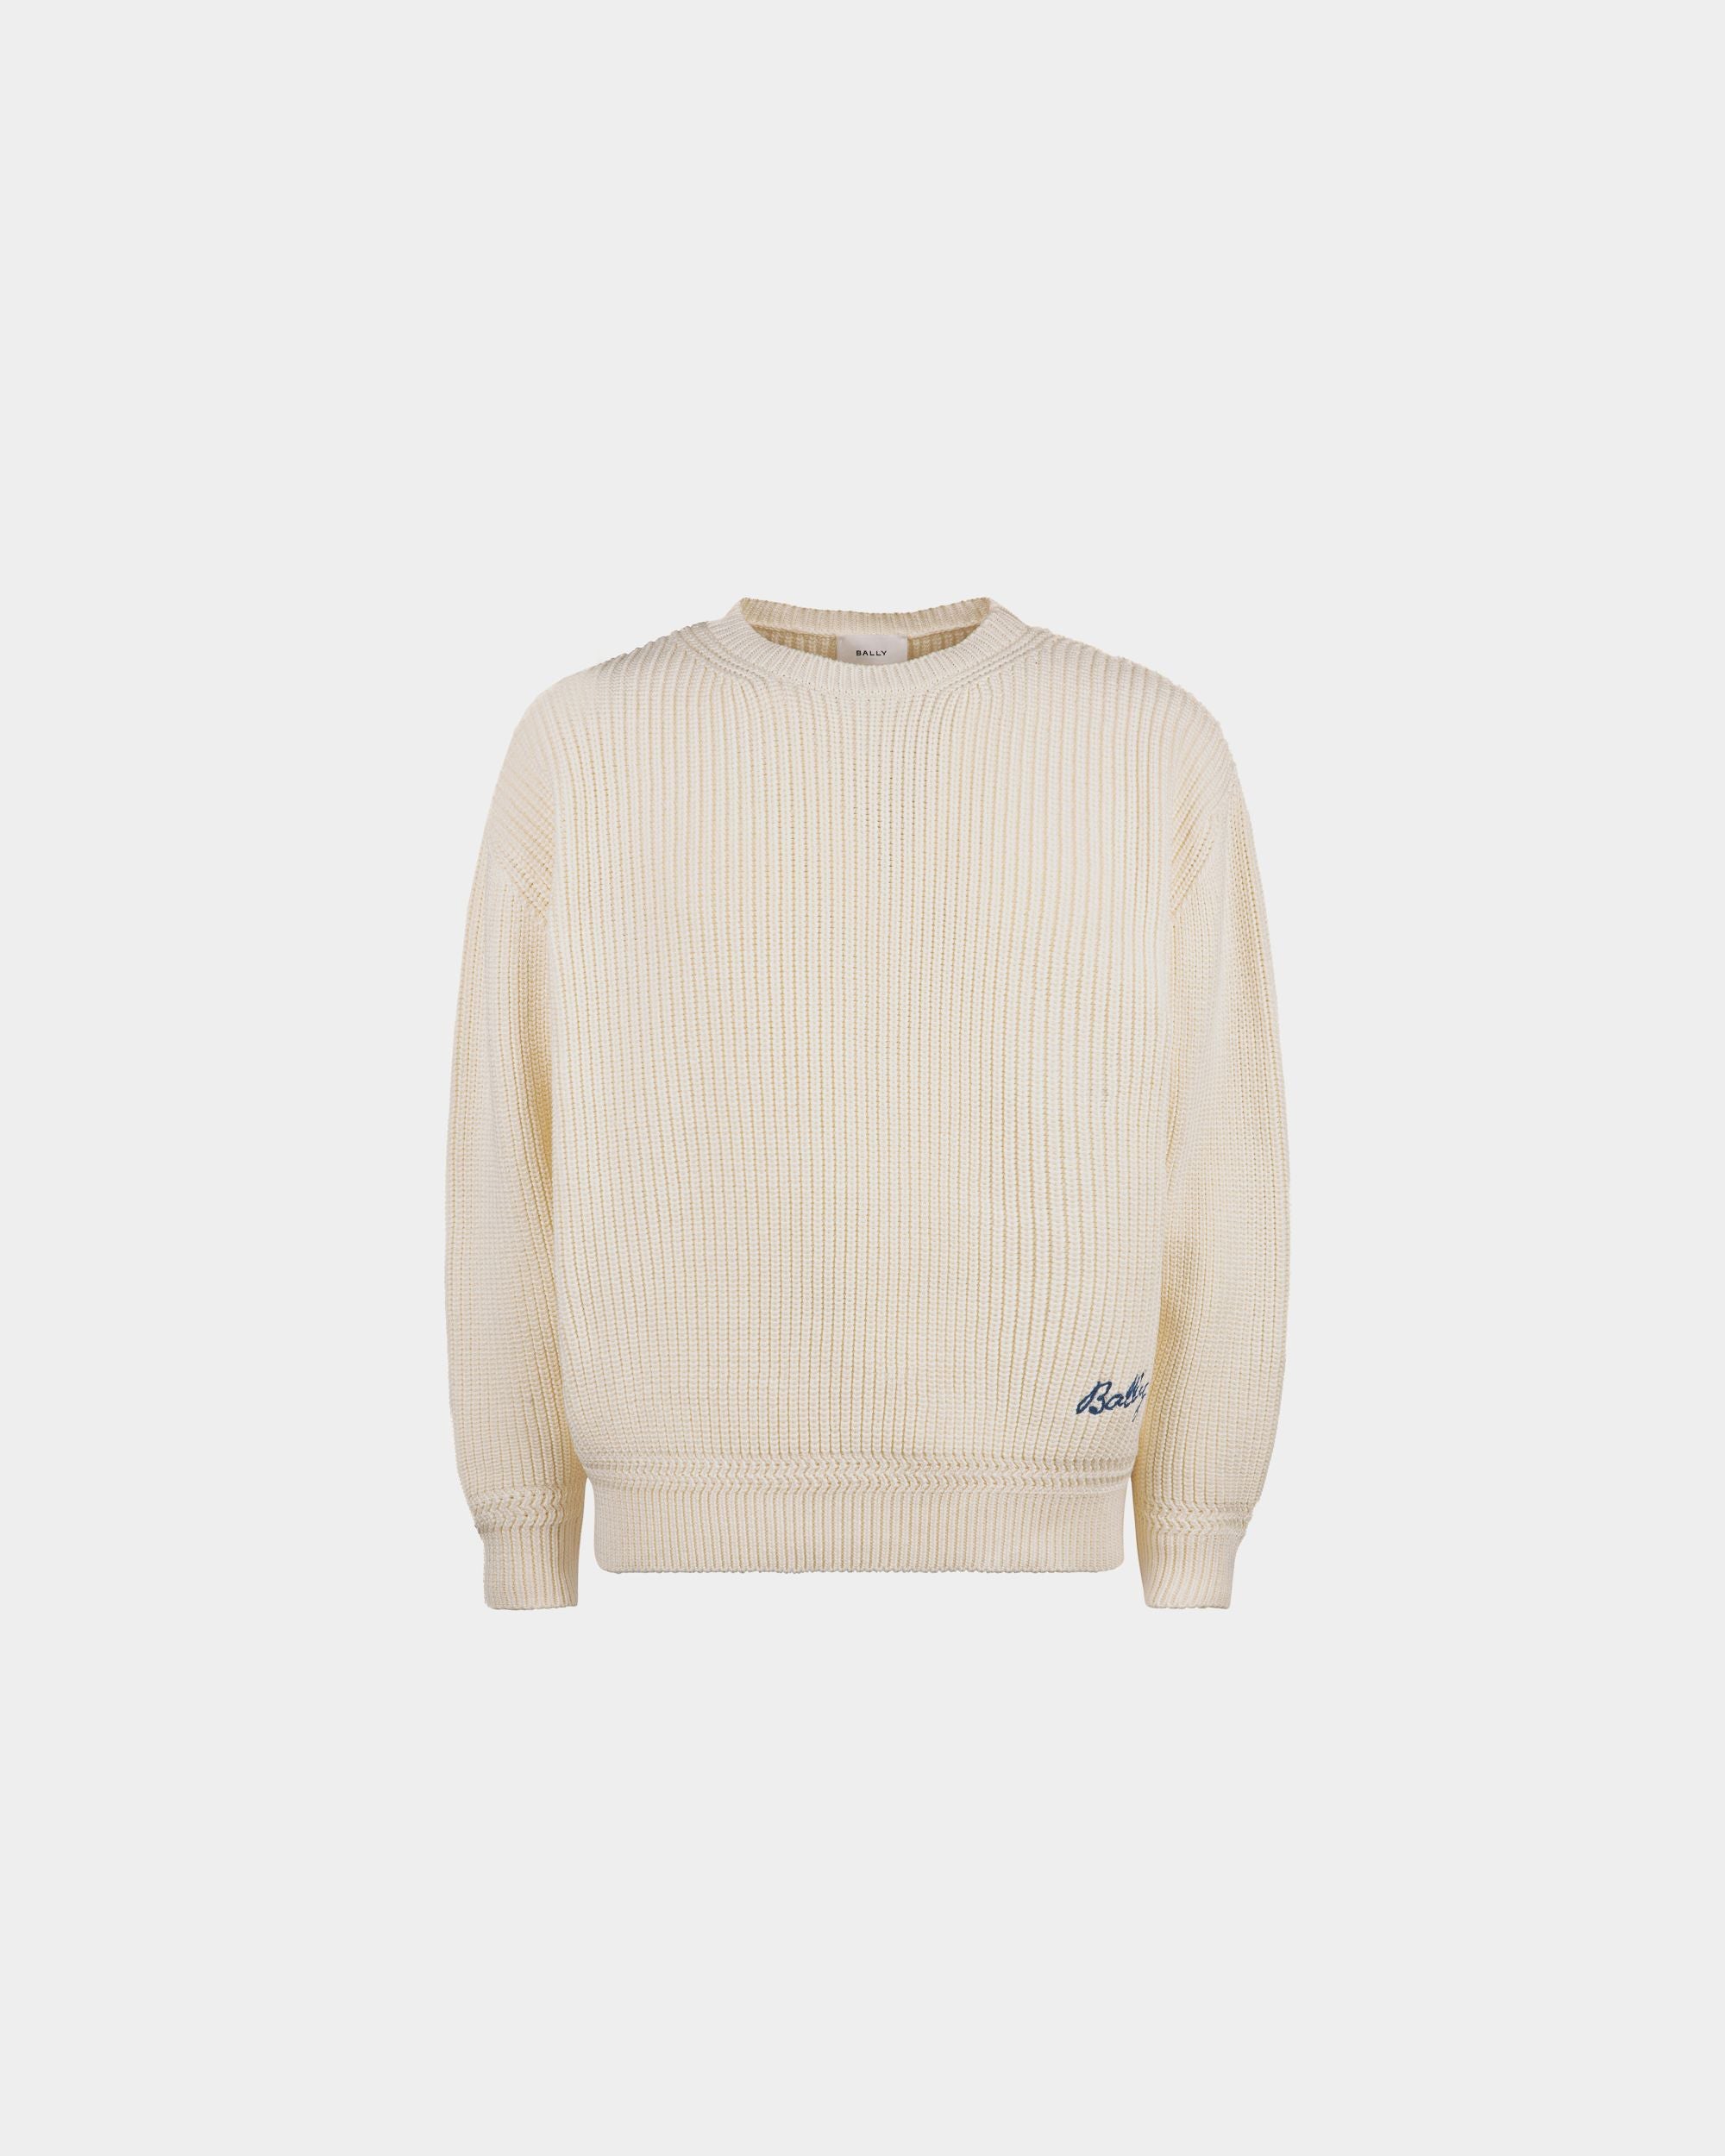 Men's Crewneck Sweater in White Cotton | Bally | Still Life Front